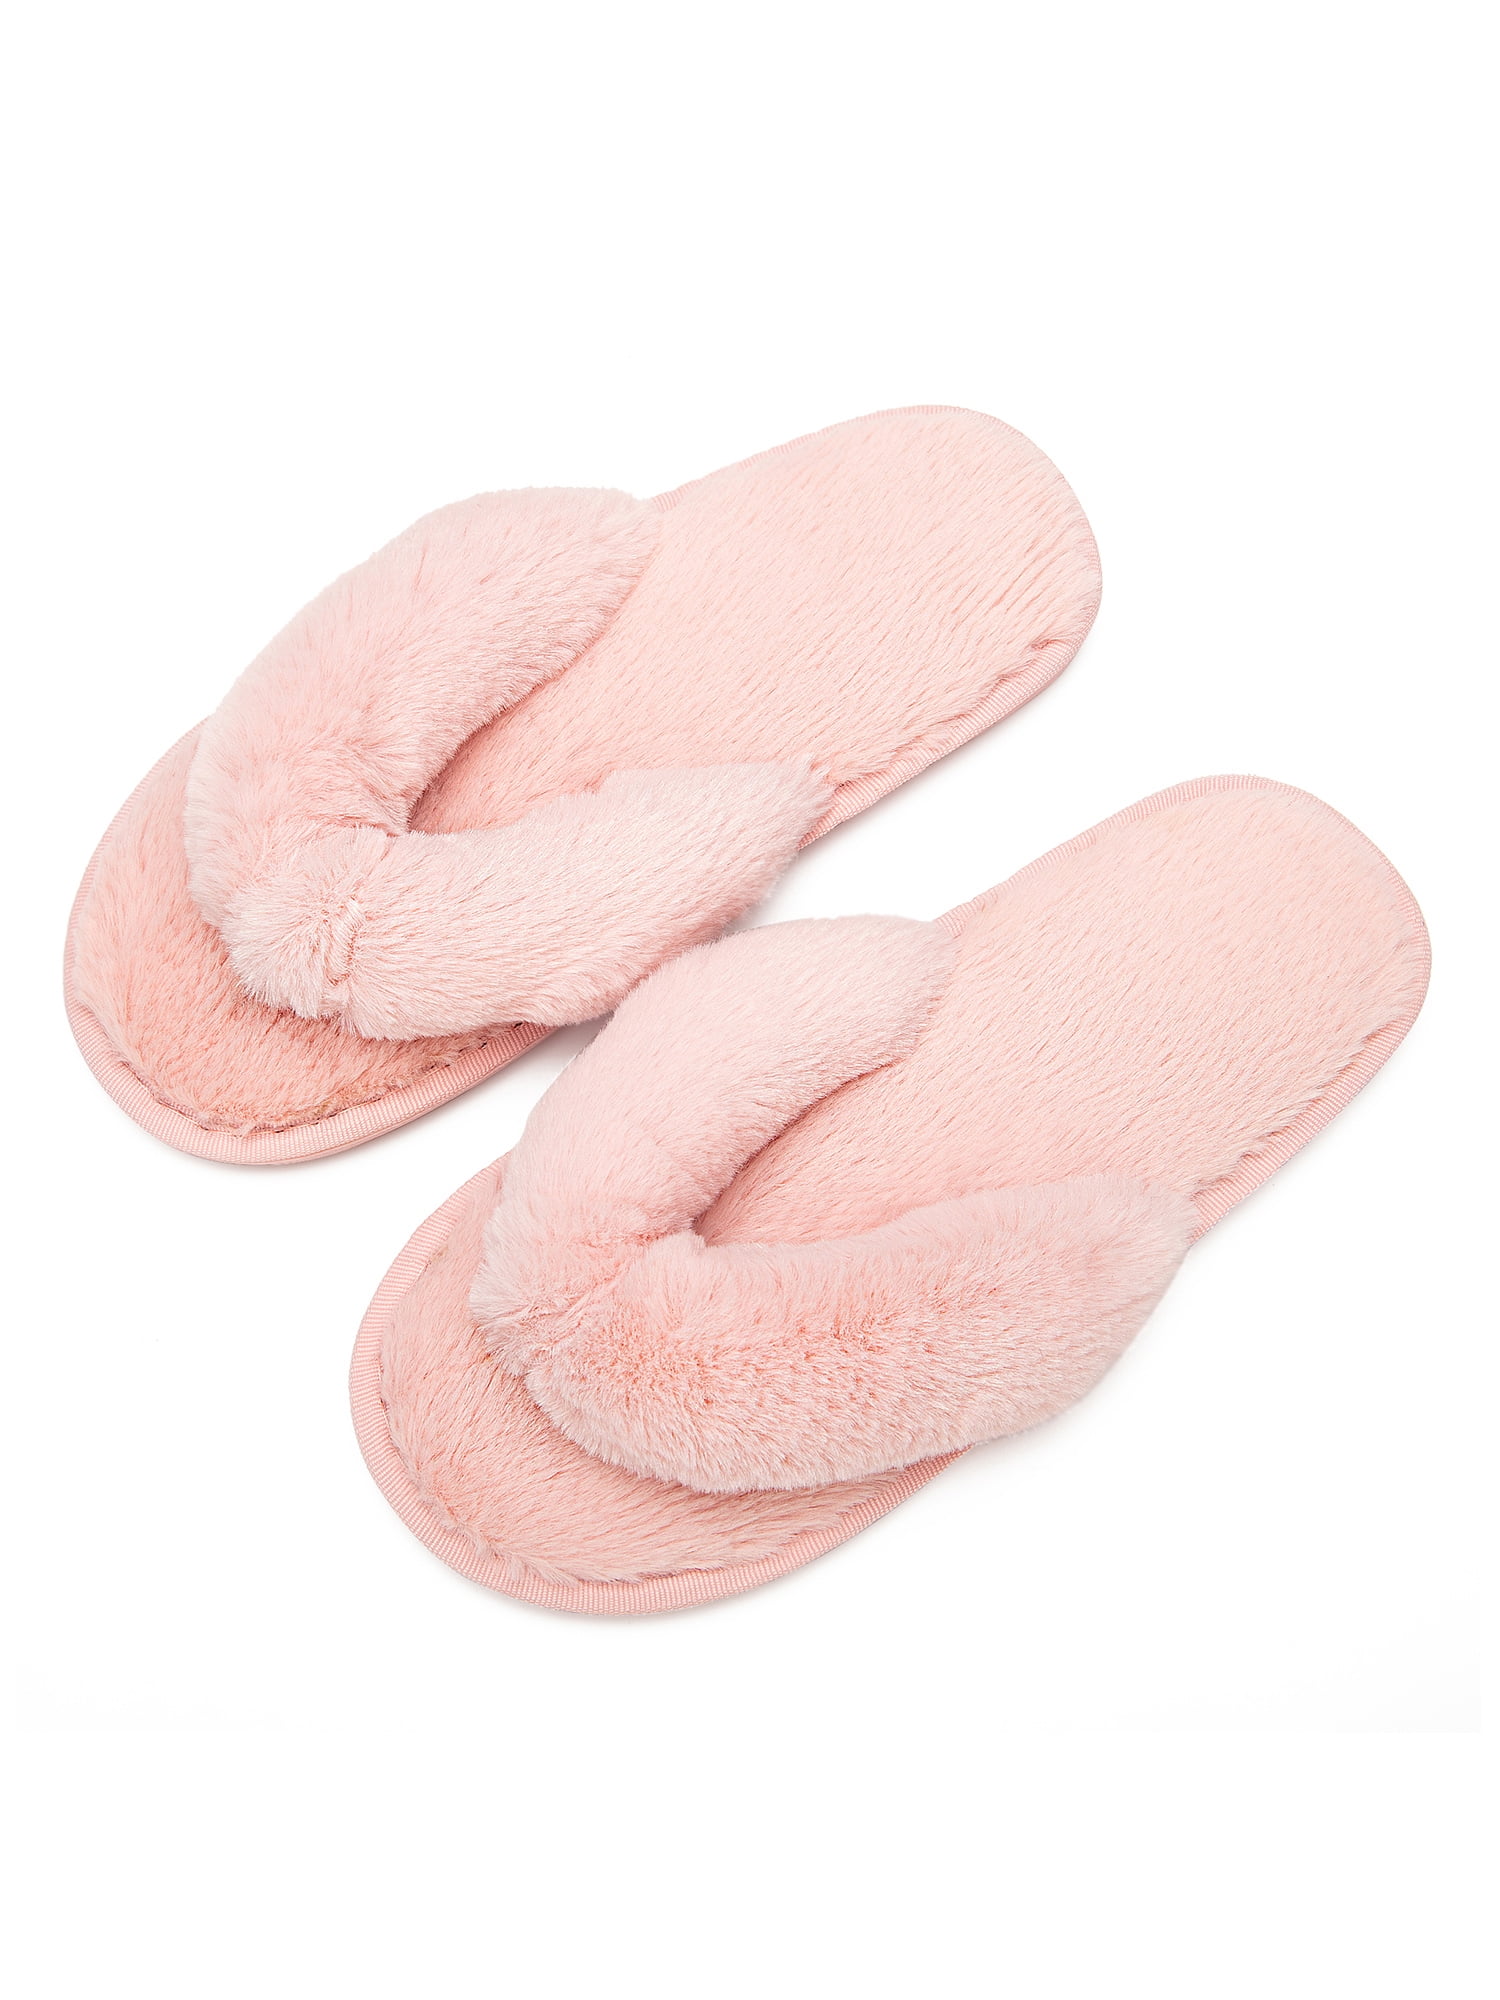 BESTOYARD Plush Flip Flop Slippers Indoor Thong Slippers Winter House Slippers Pink Size 36-37